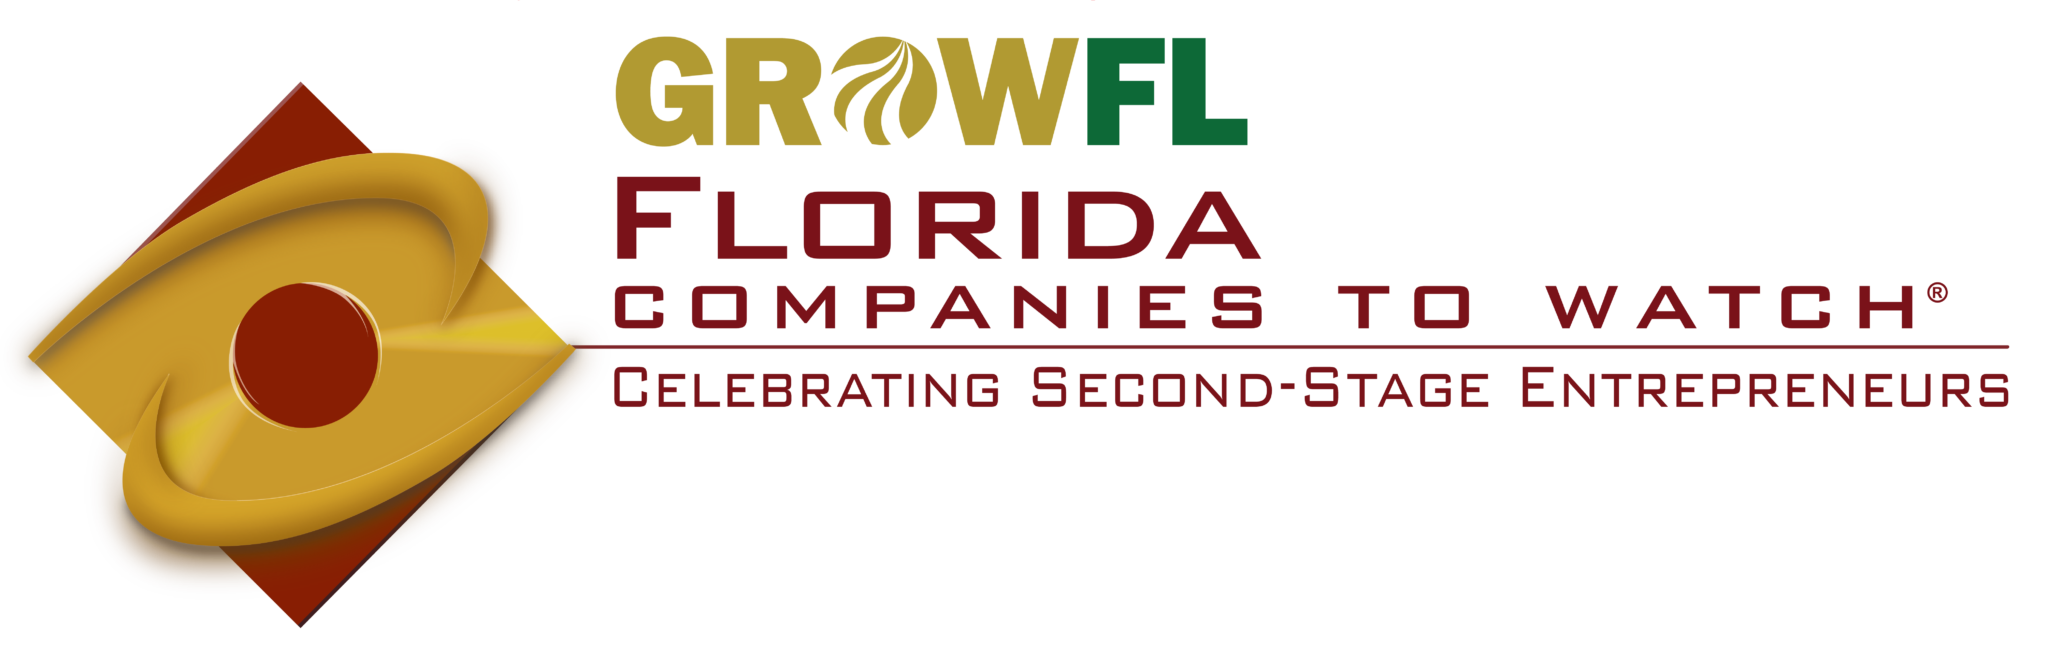 12th Annual GrowFL Florida Companies to Watch Finalists Announced​ - GrowFL